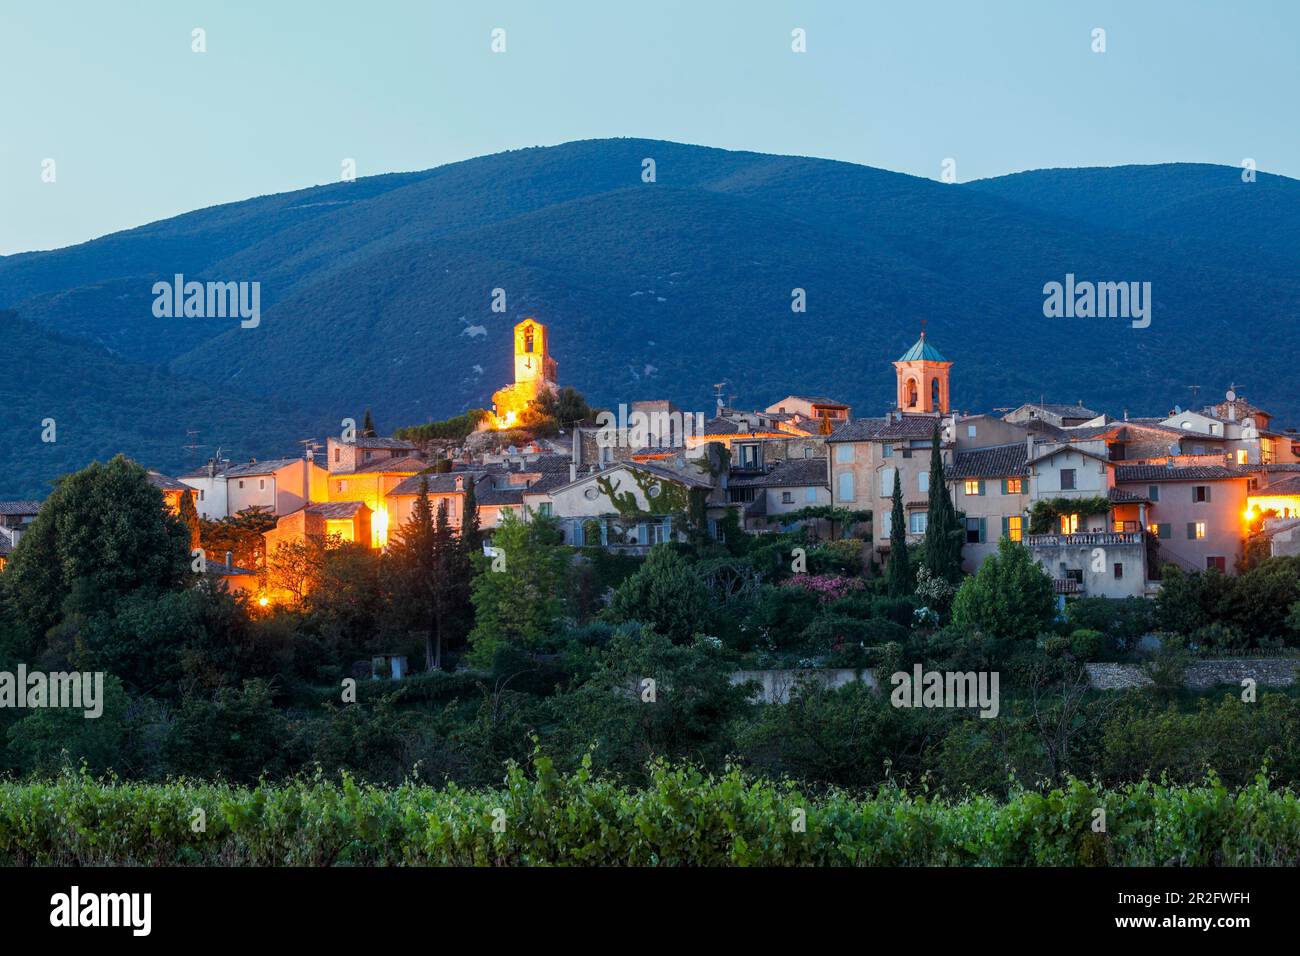 Dorf Lourmarin im Luberon, Vaucluse, Provence, Frankreich Stockfoto